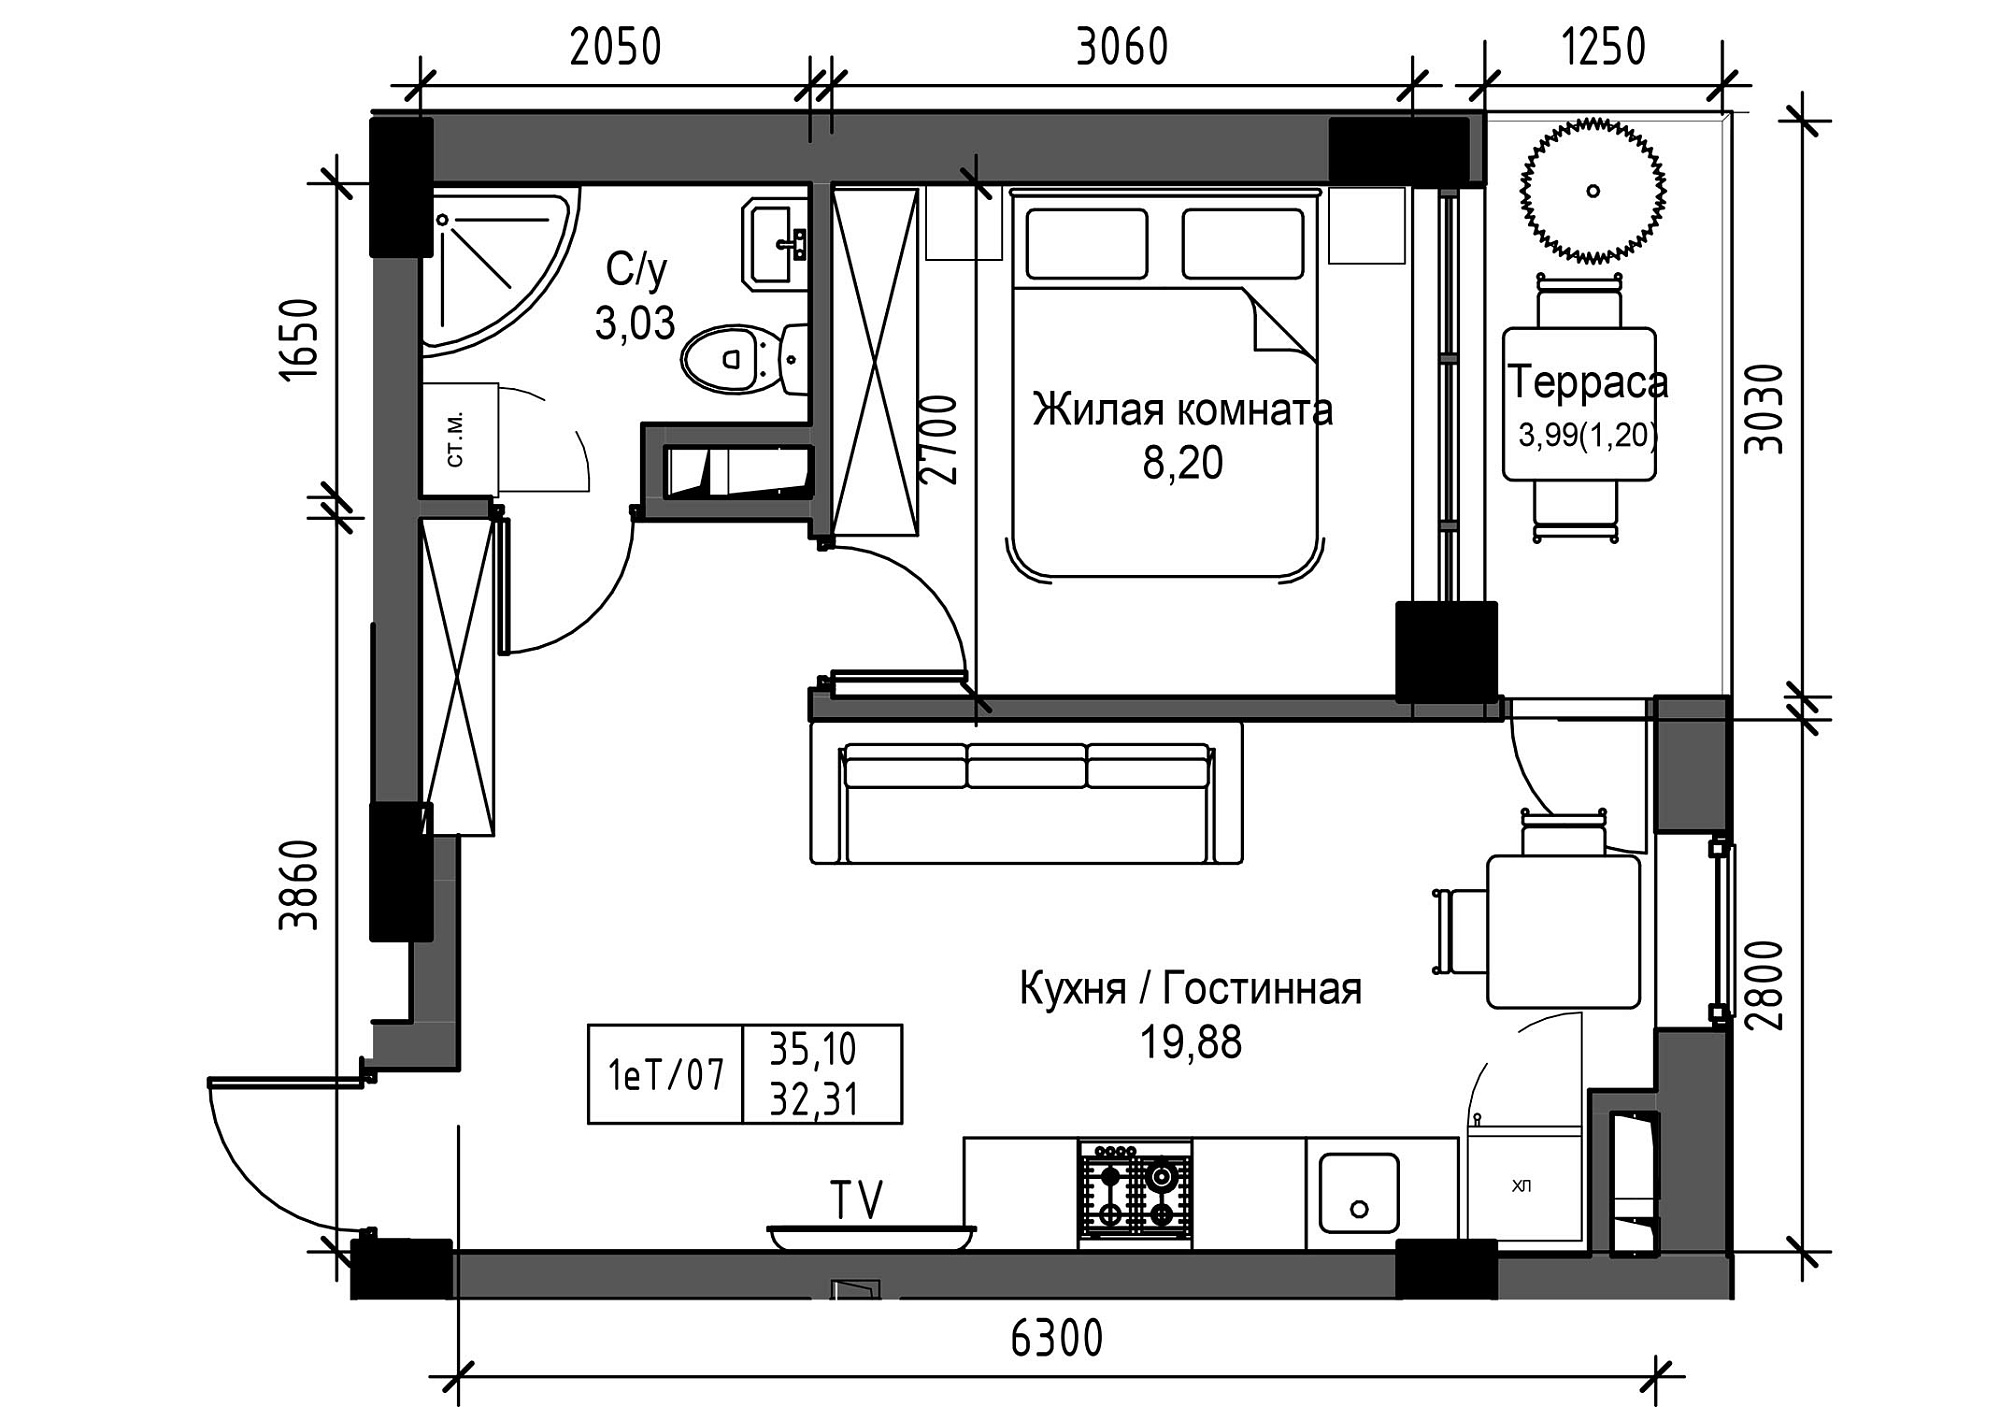 Планування 1-к квартира площею 32.31м2, UM-003-03/0017.